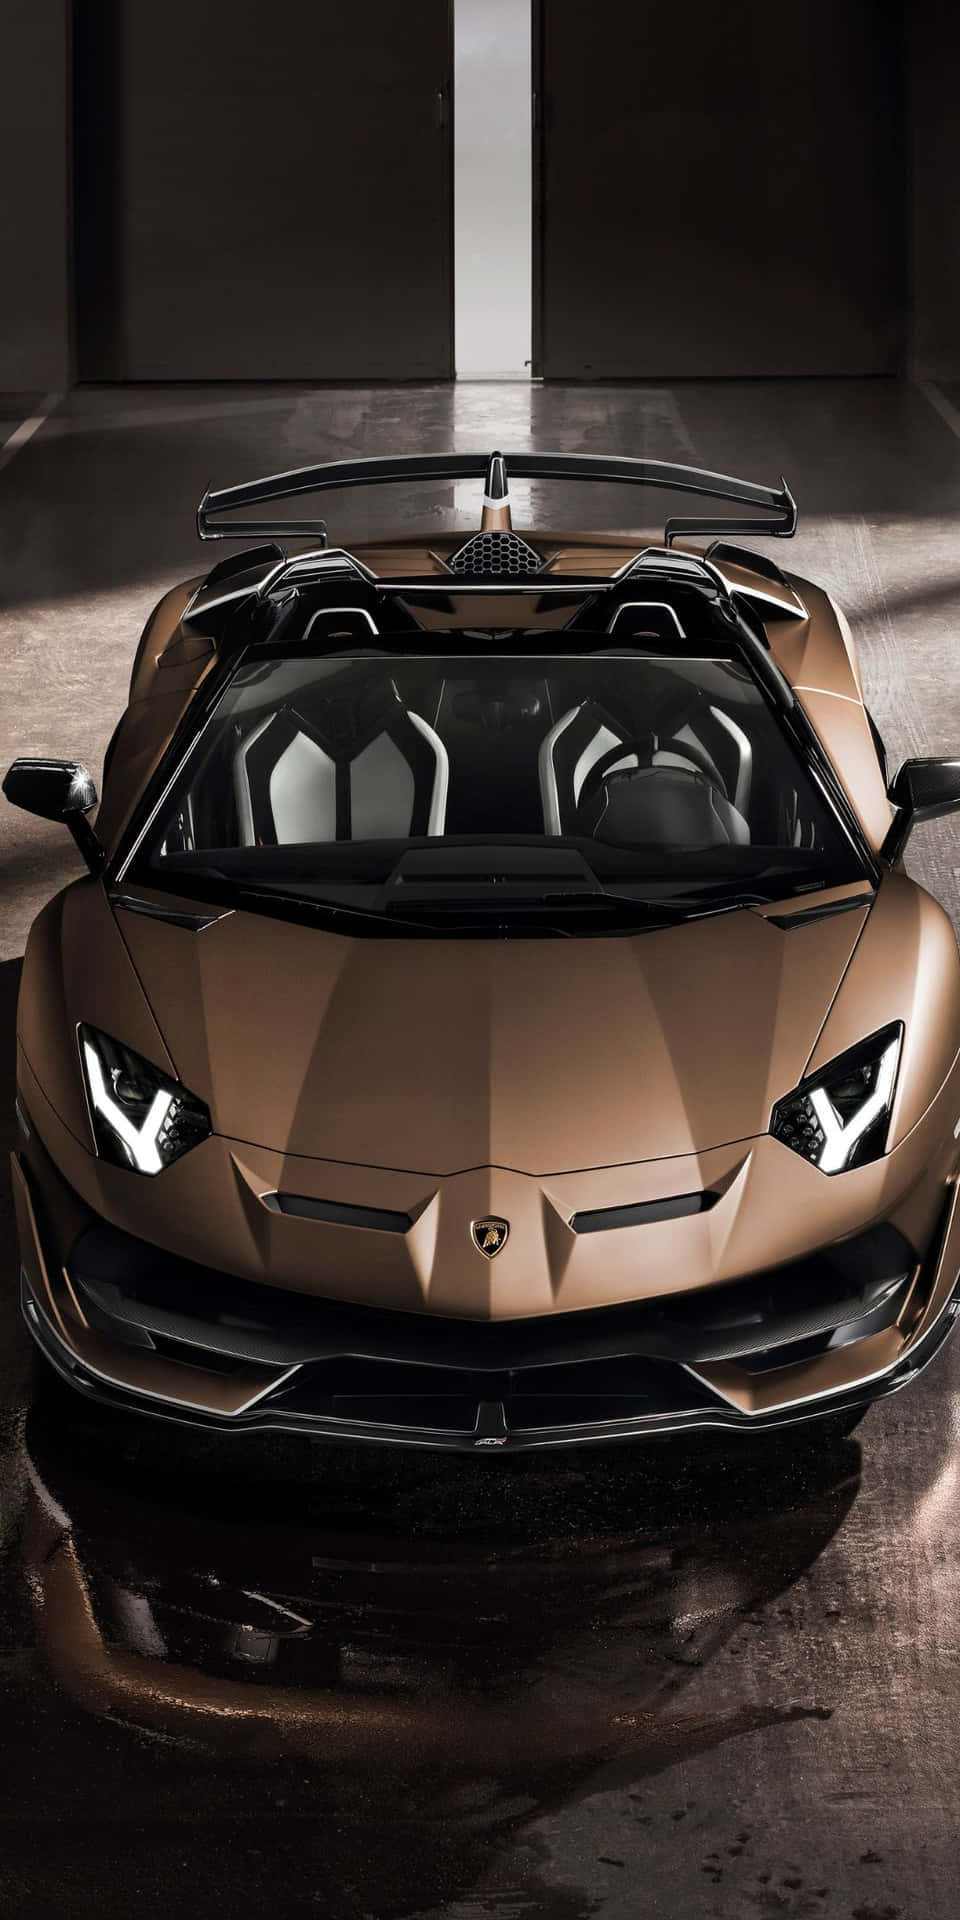 Bildpixel 3 Lamborghini - Bakgrundsbild Med Lyxbil